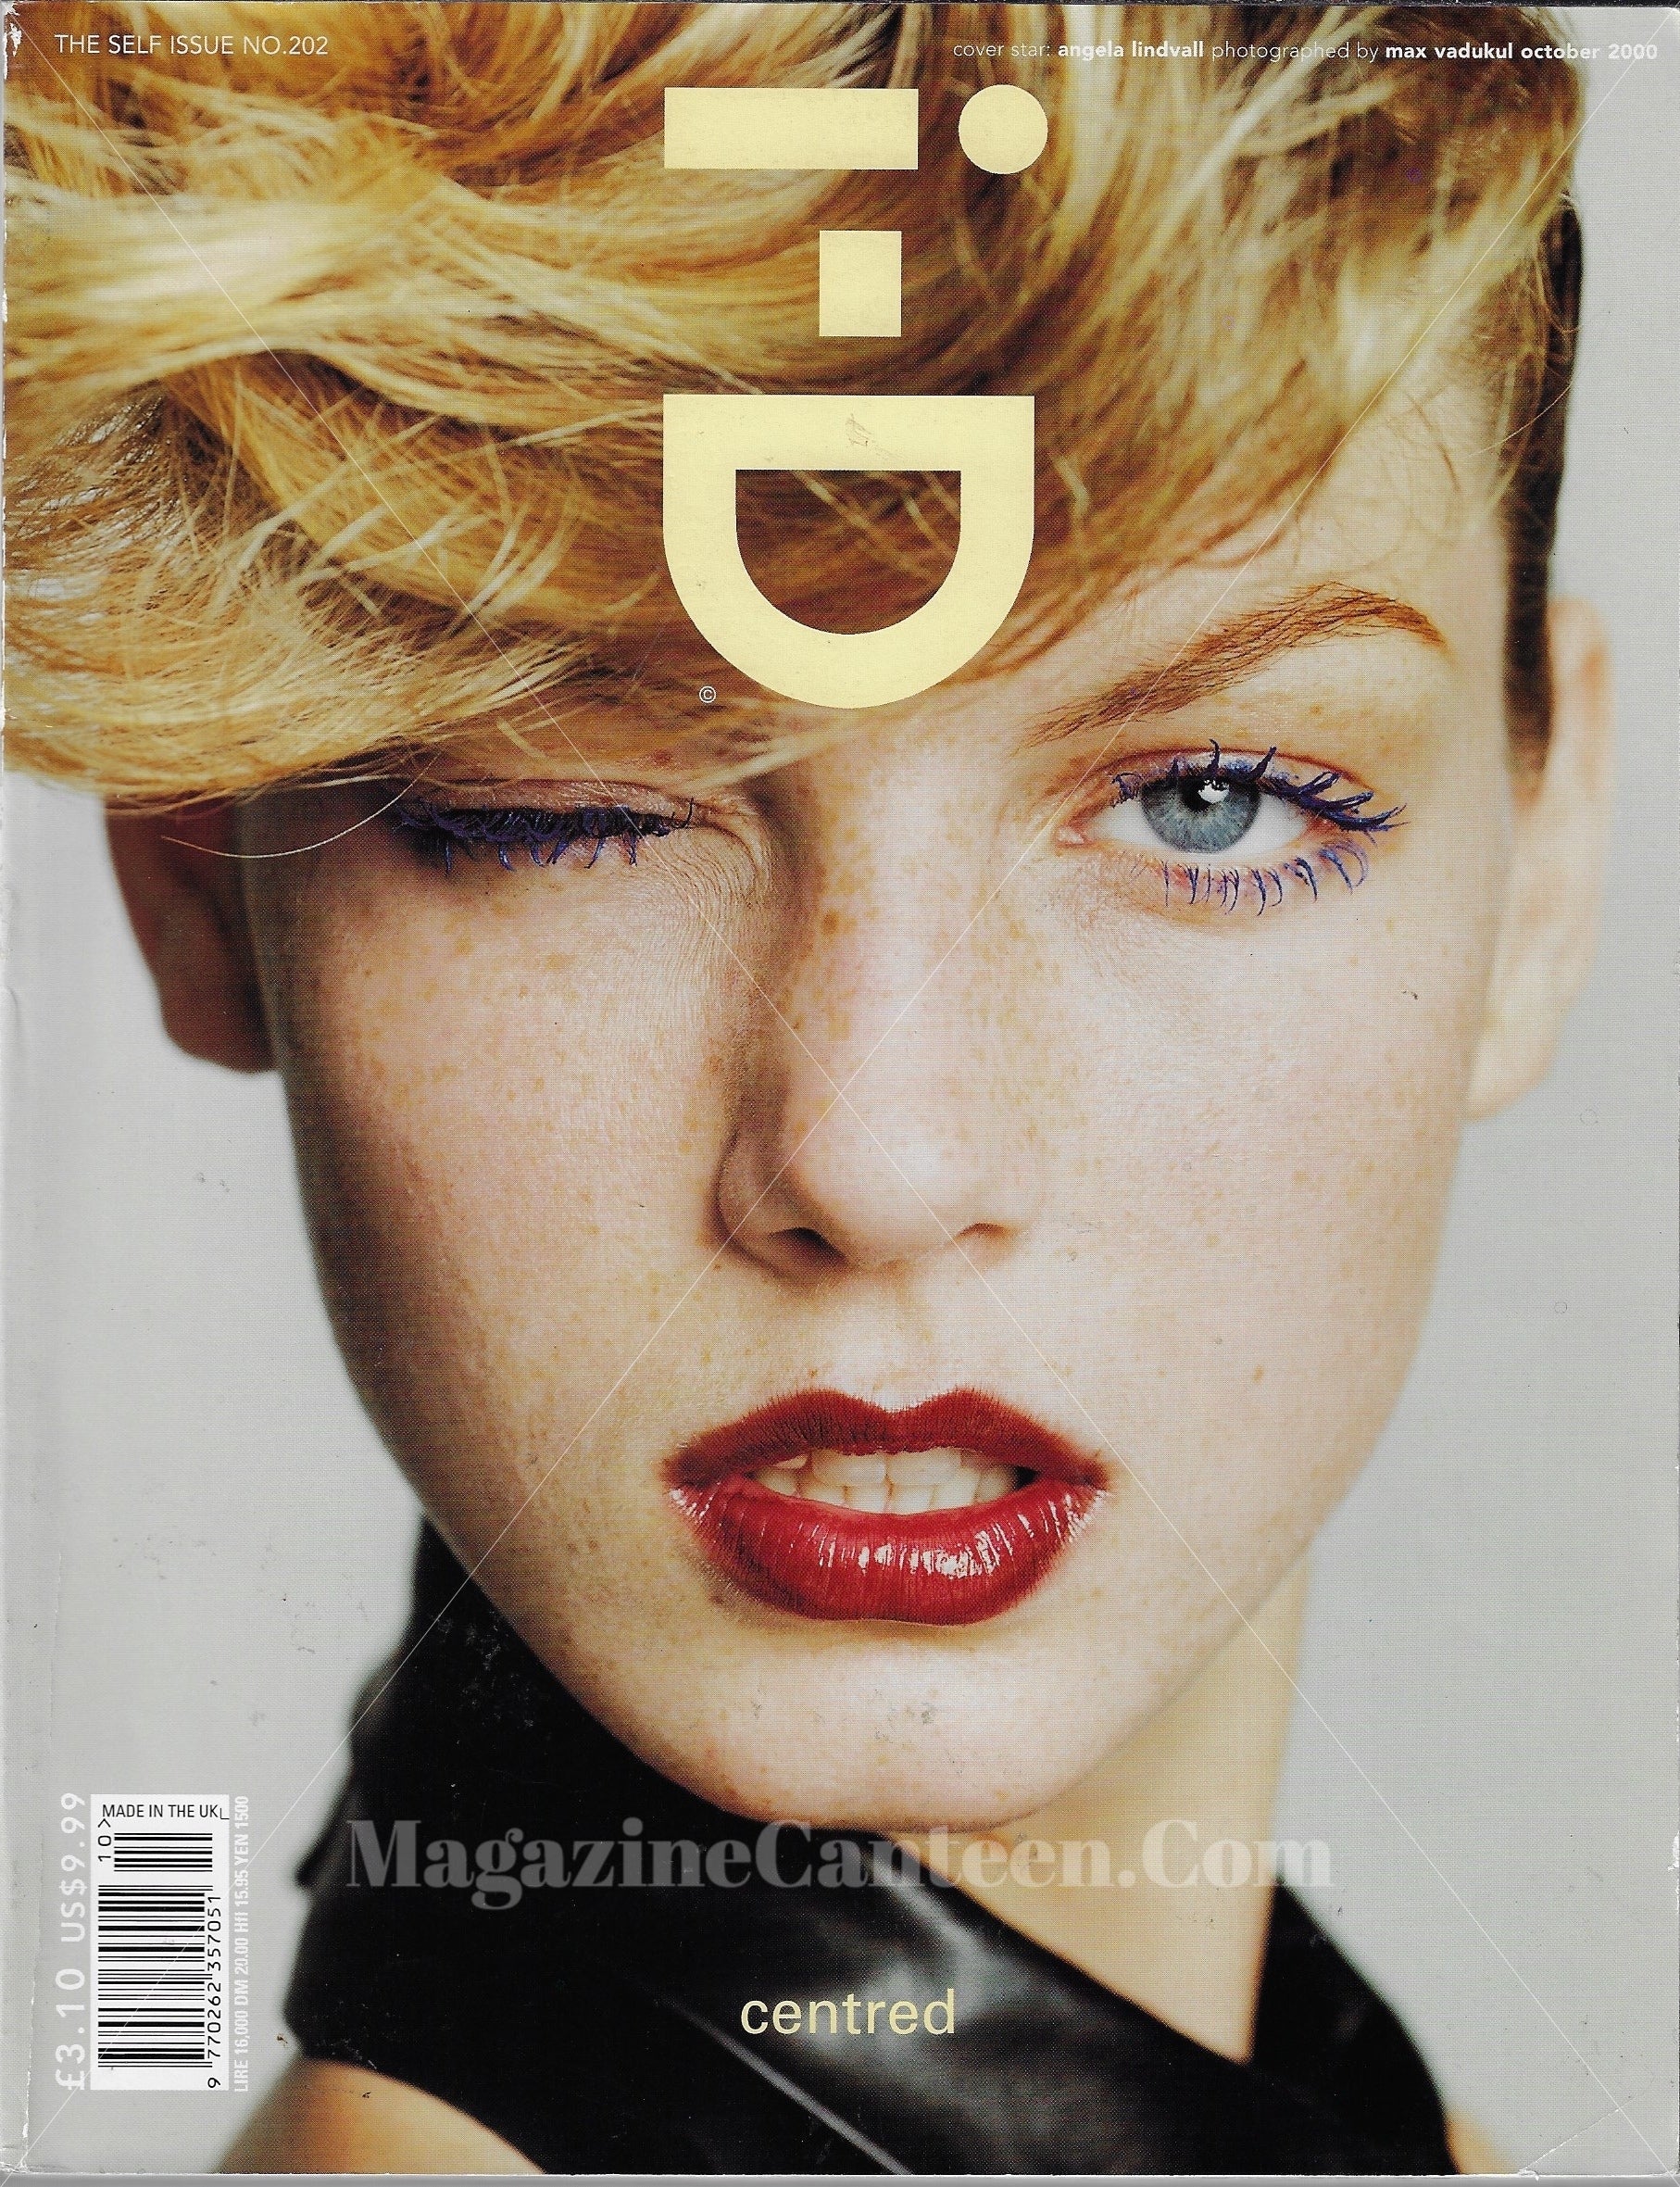 I-D Magazine 202 - Angela Lindvall 2000